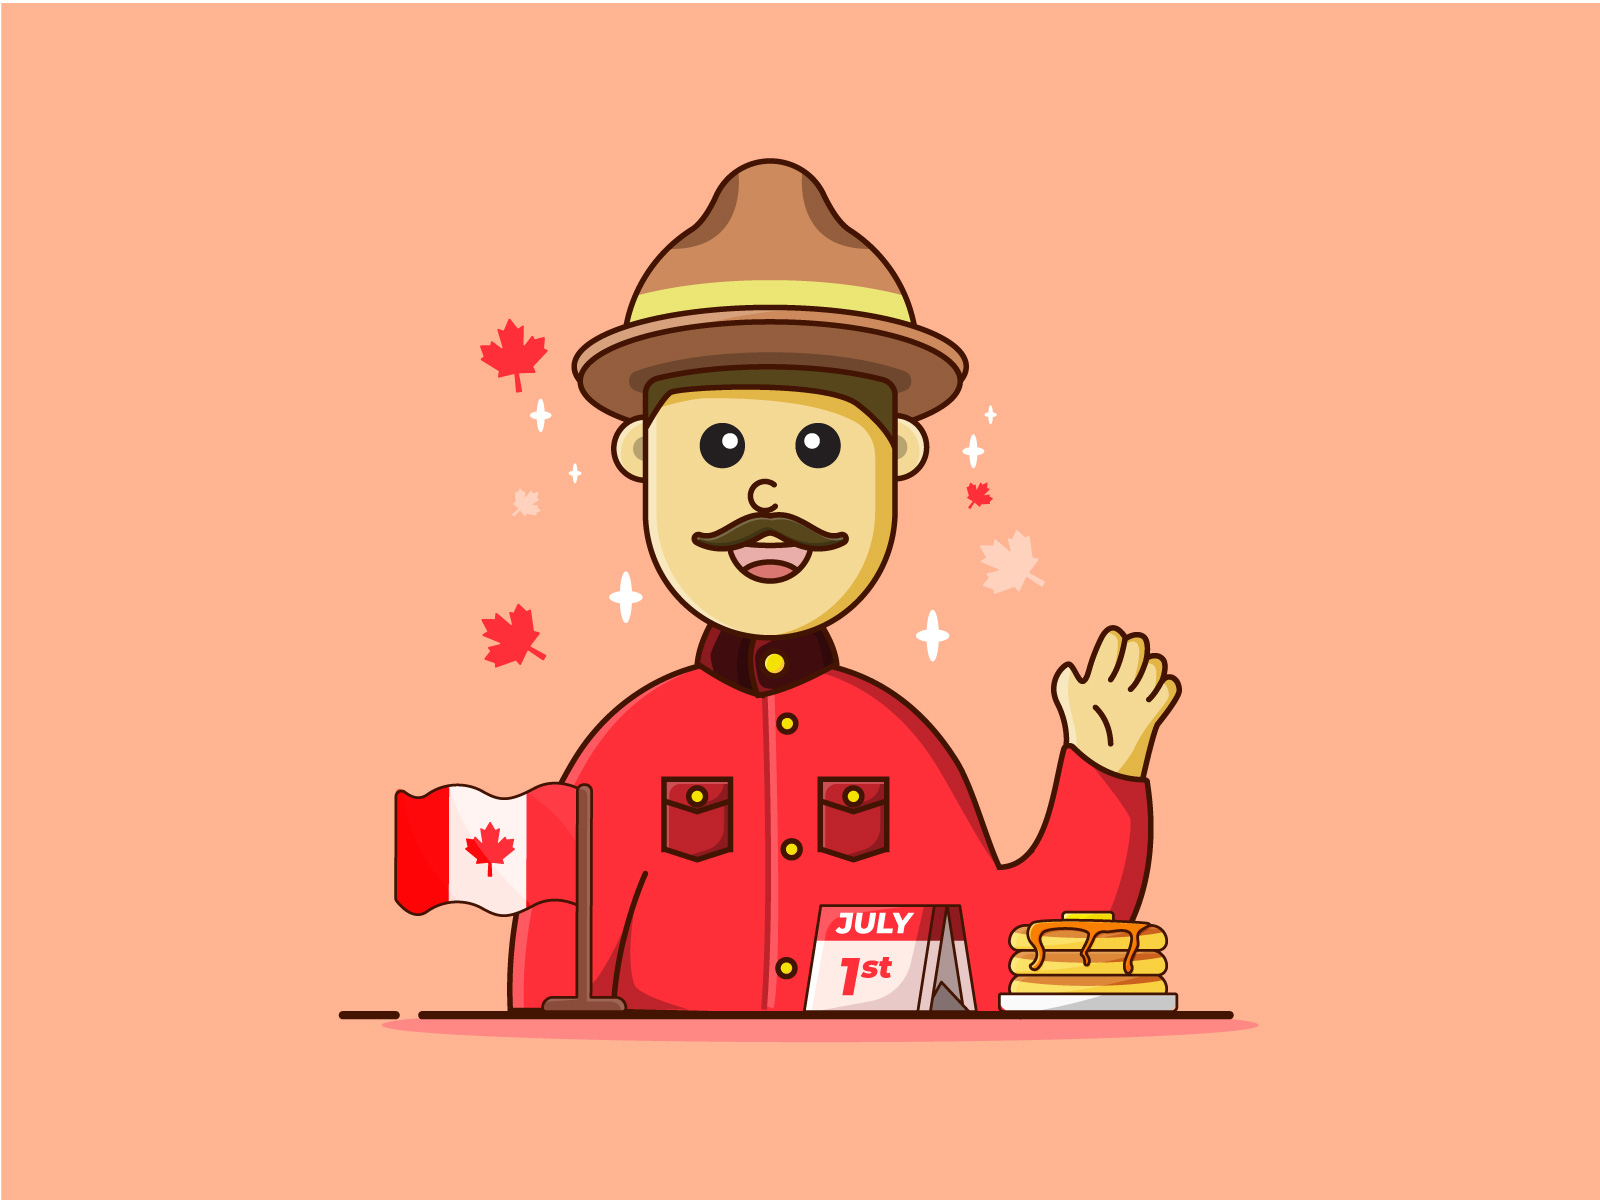 ranger canadian by Luq_ha on Dribbble